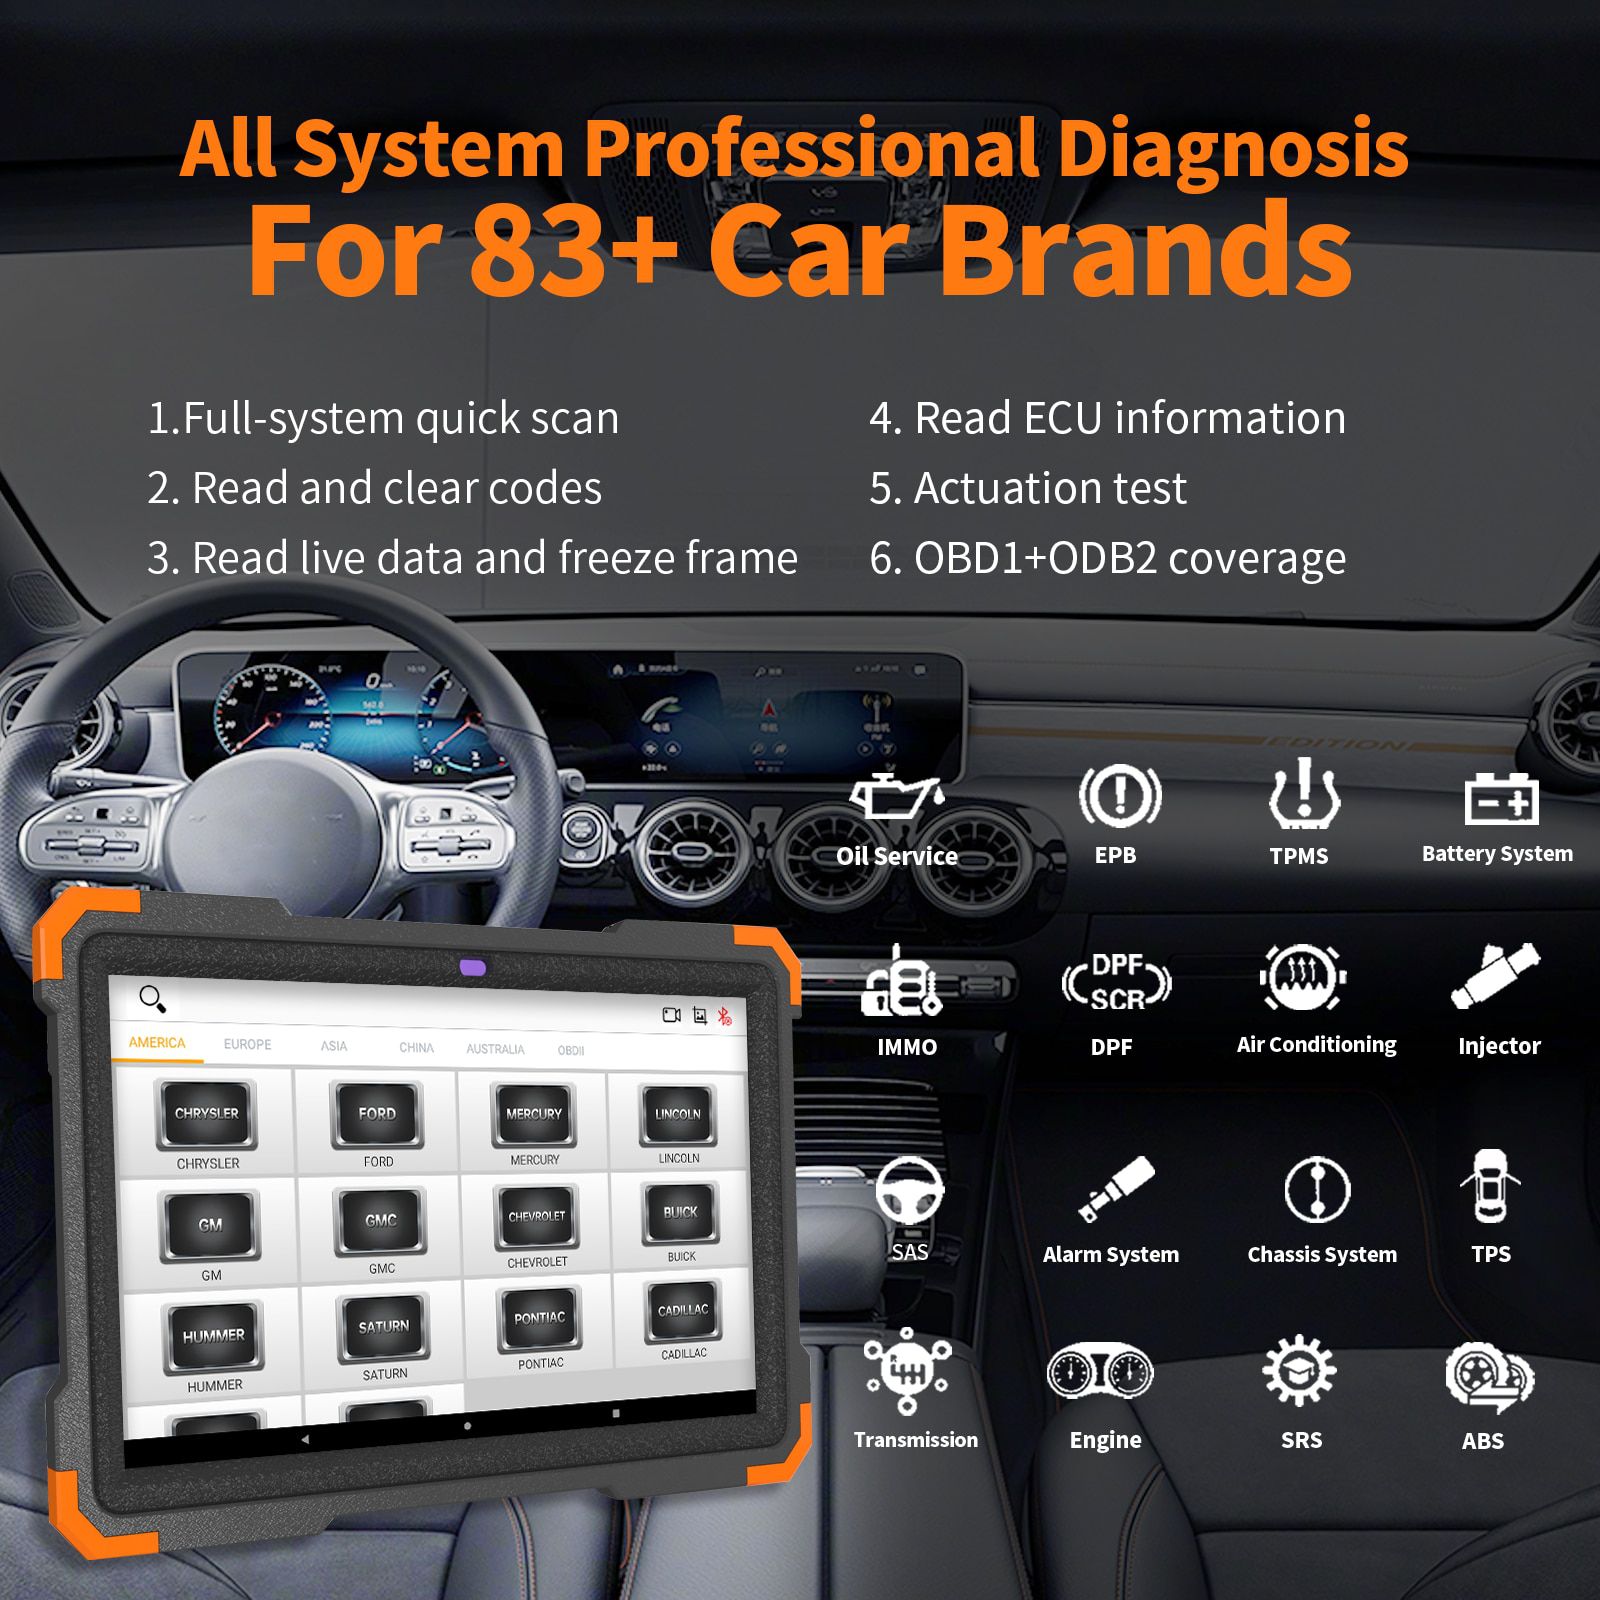 Humzor NS366S Car Diagnostic Scanner Tablet Sistema Completo para SAS CVT Gear Learning 13 Reset Automotive OBD 1/2 Ferramenta de Diagnóstico